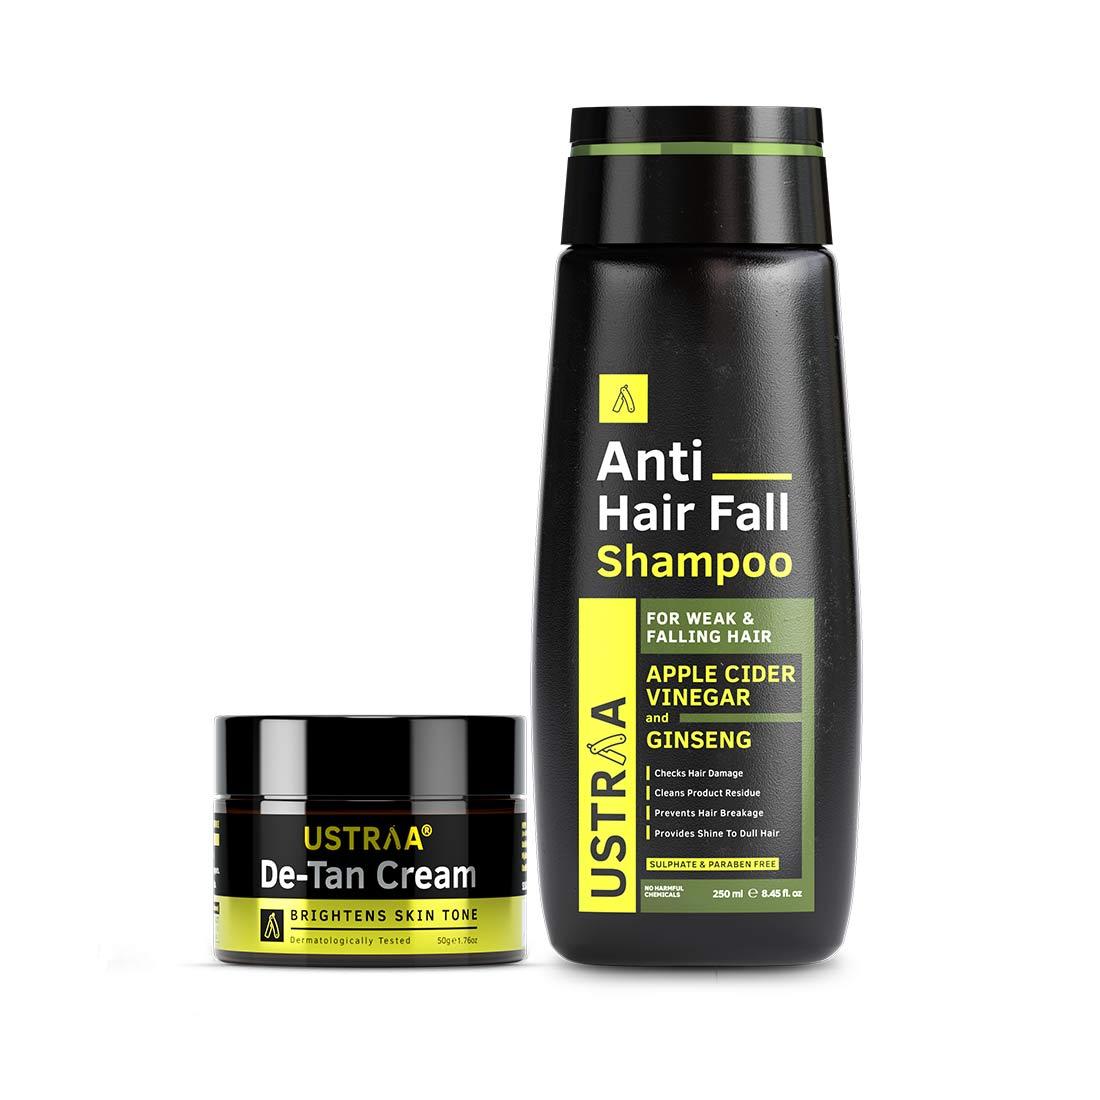 De-Tan Cream for Men and Anti-Hairfall Shampoo